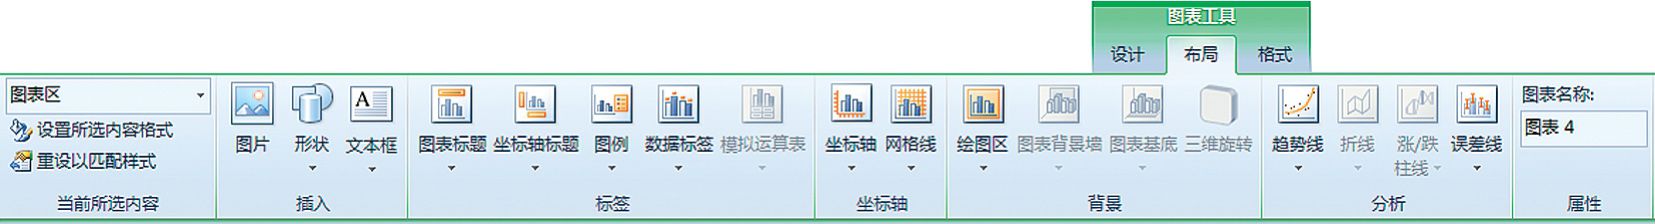 Excel 2007/2010图表工具菜单